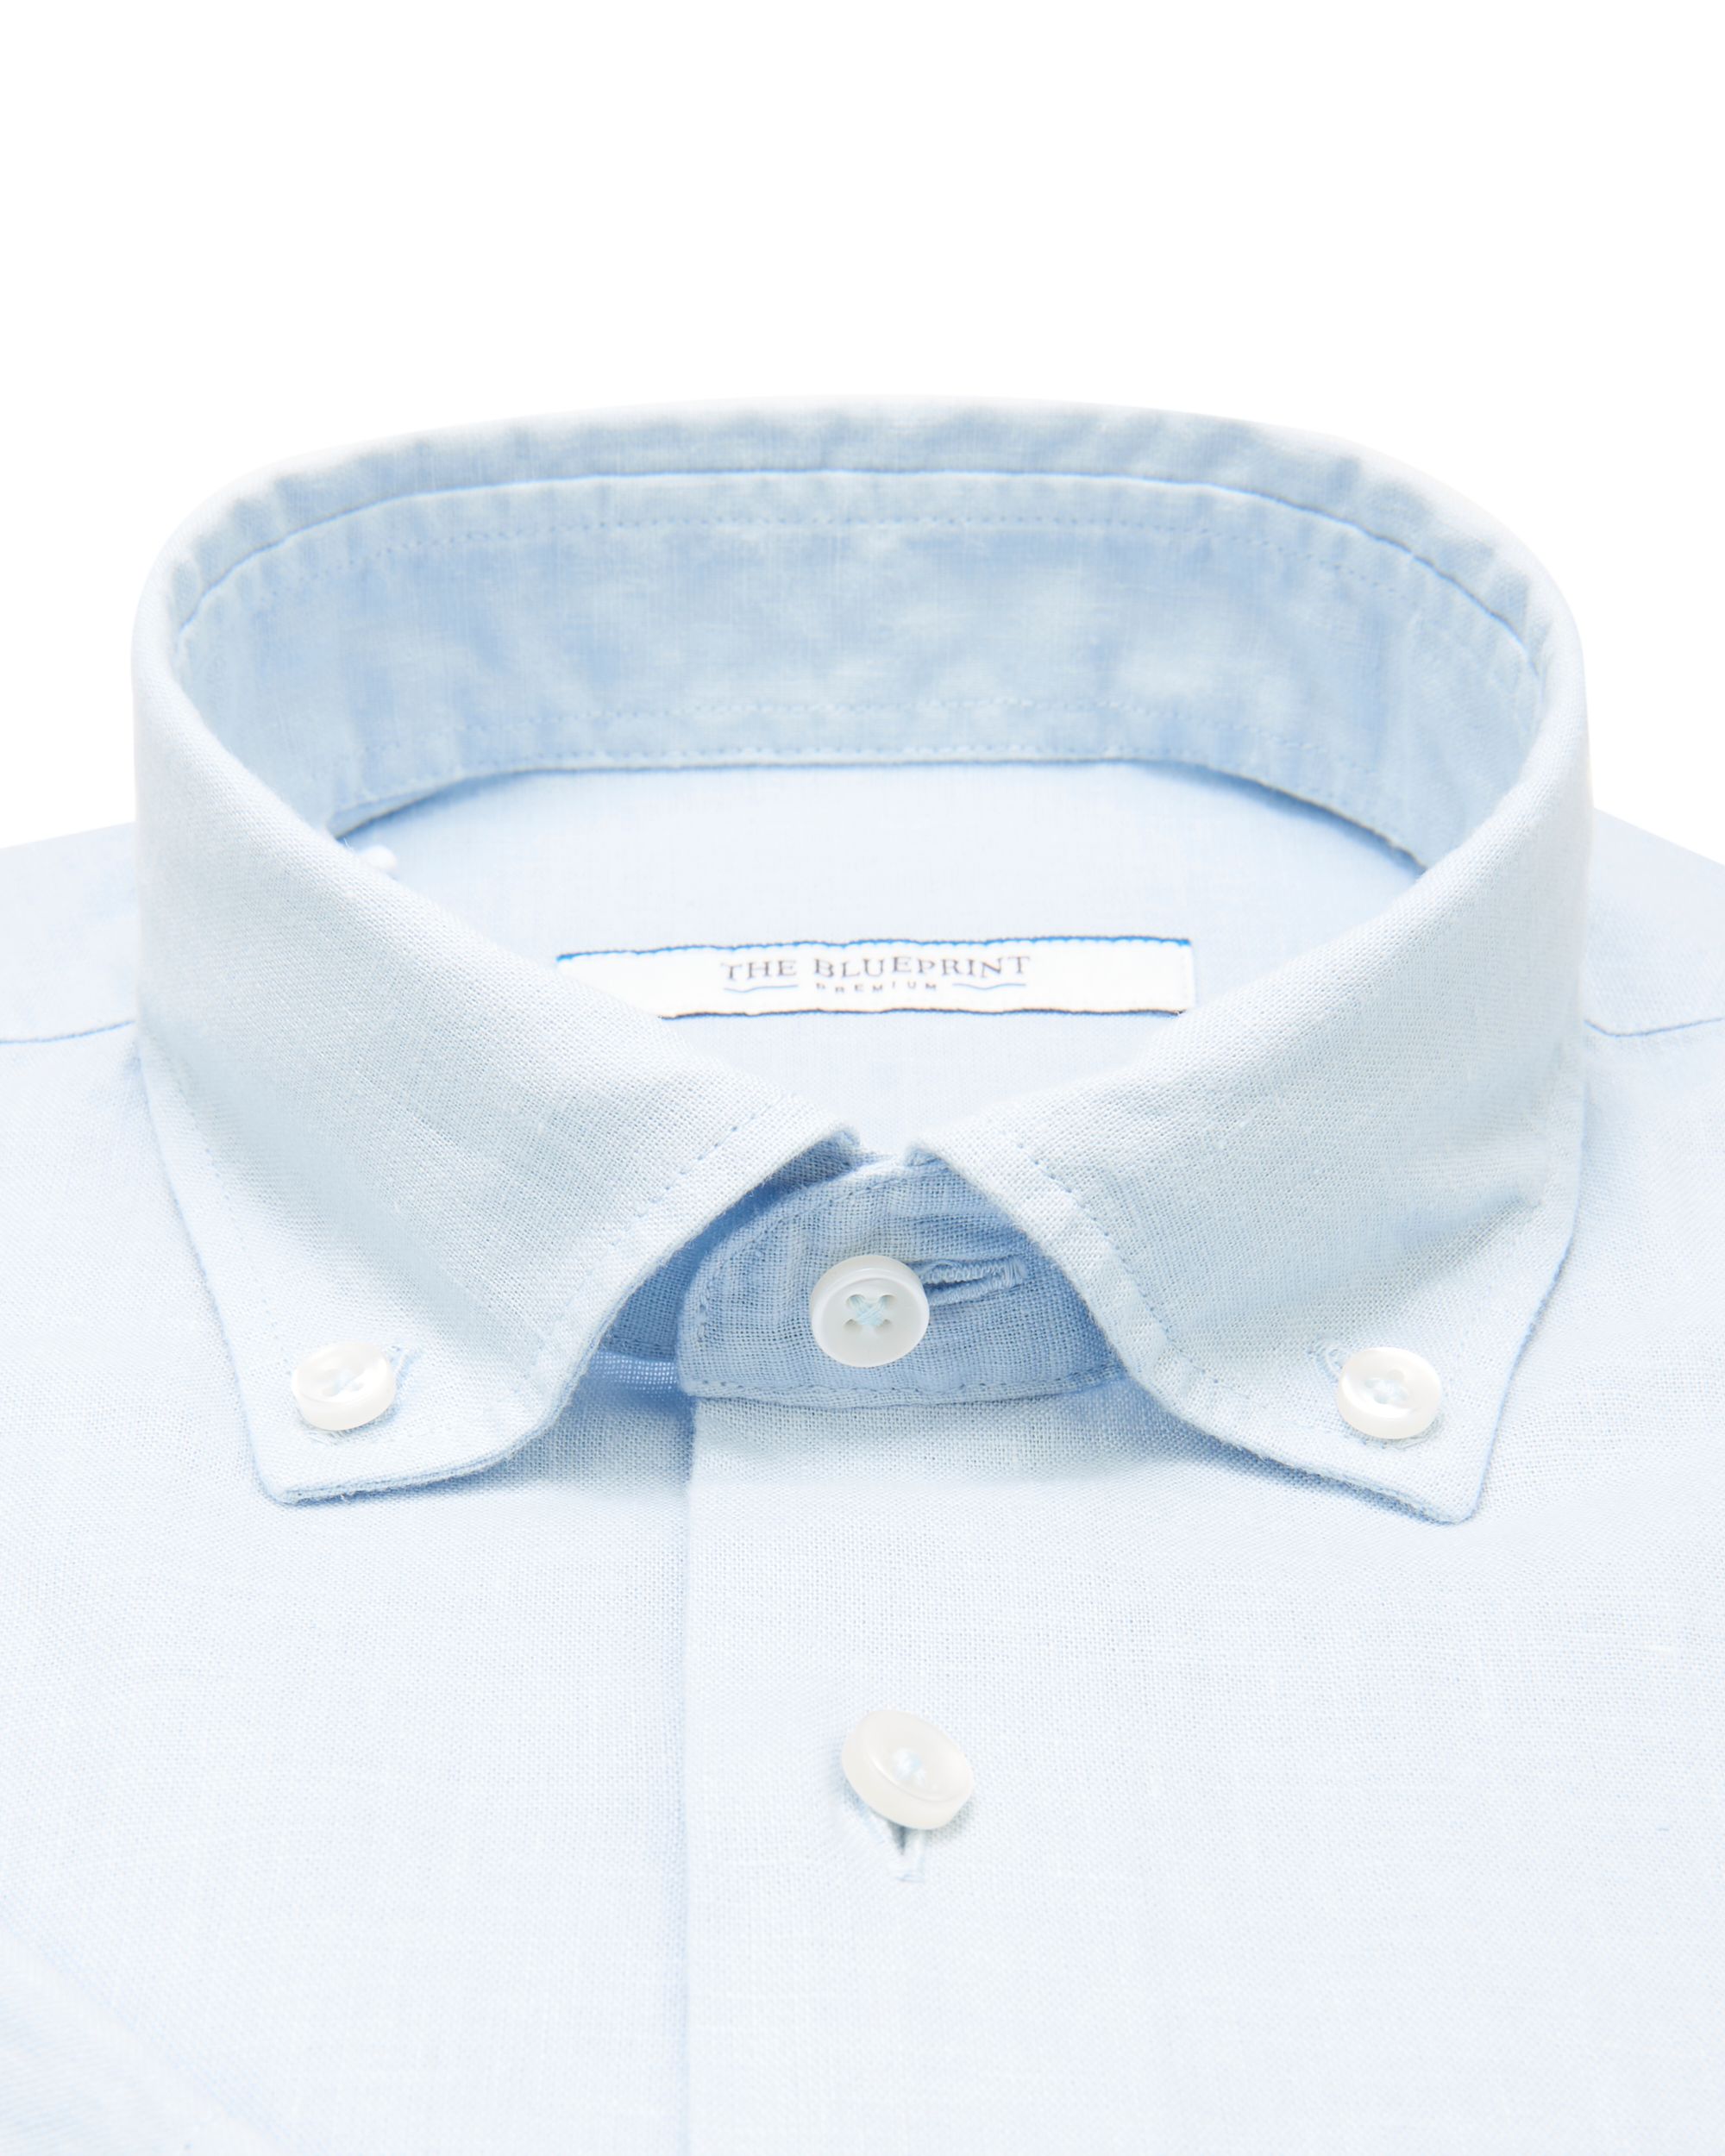 The BLUEPRINT Premium Casual Overhemd KM Lichtblauw uni 077930-005-L